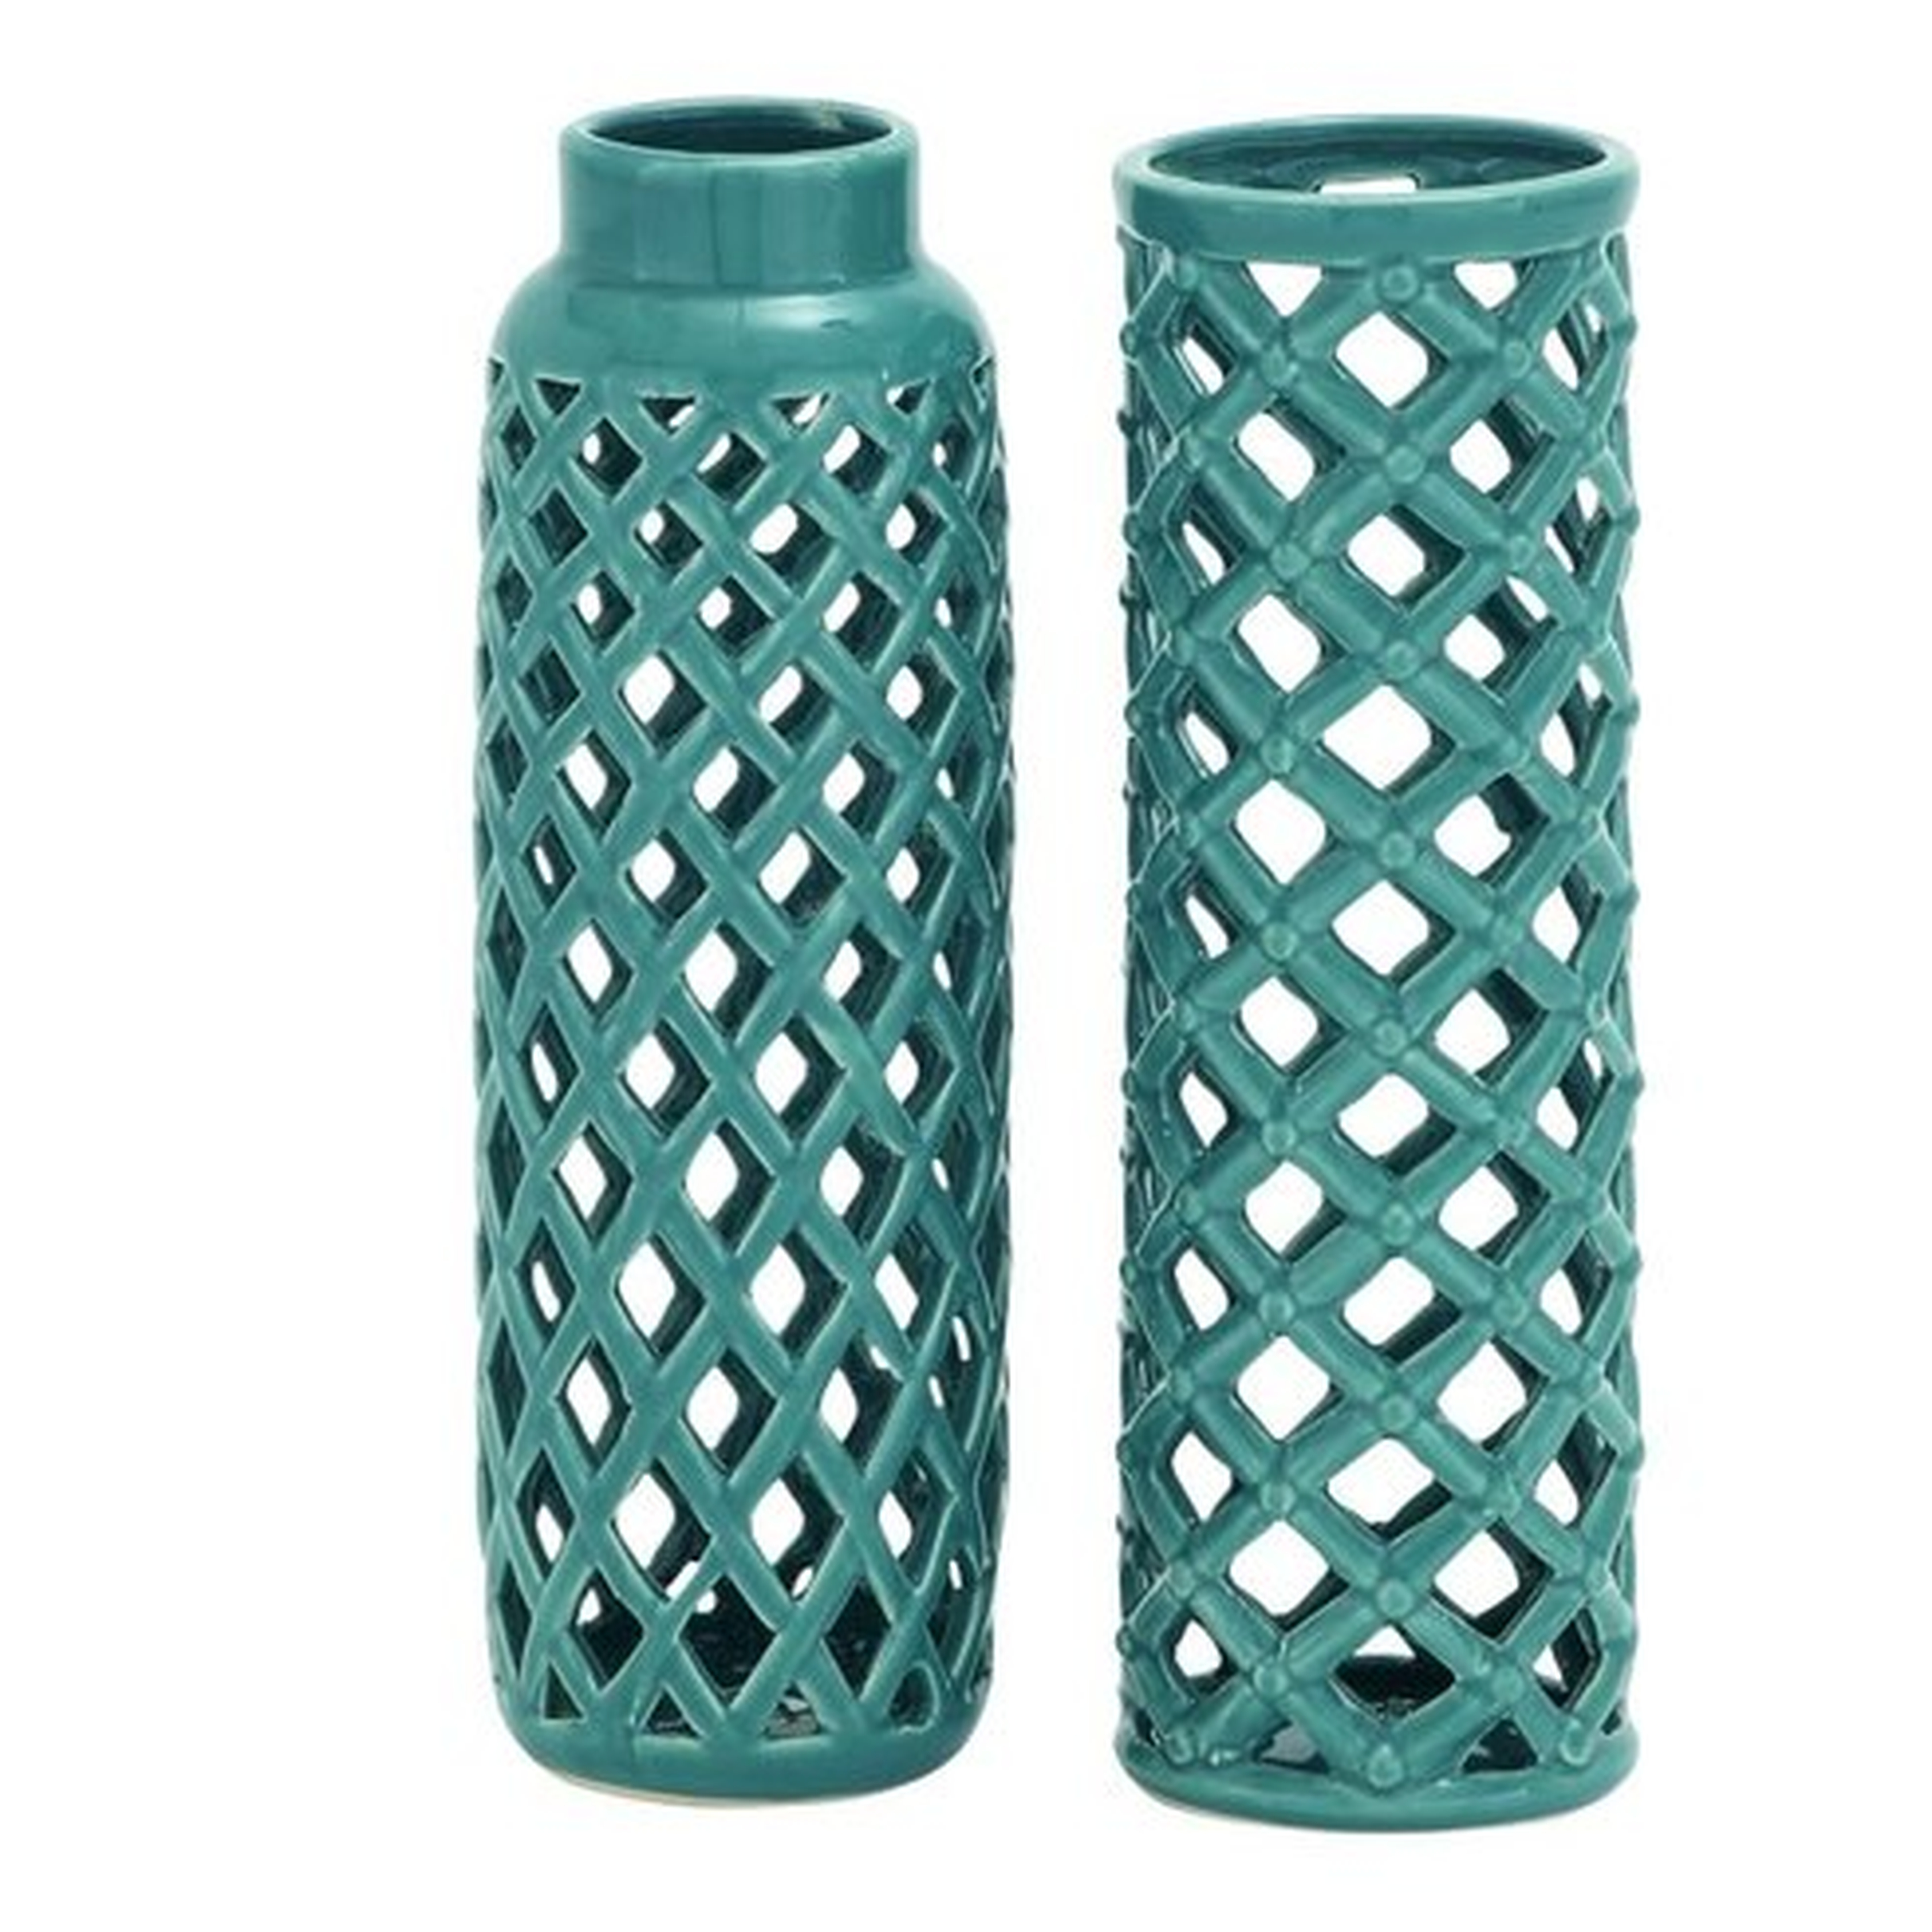 2 Piece Vase Set - Blue Green - Wayfair